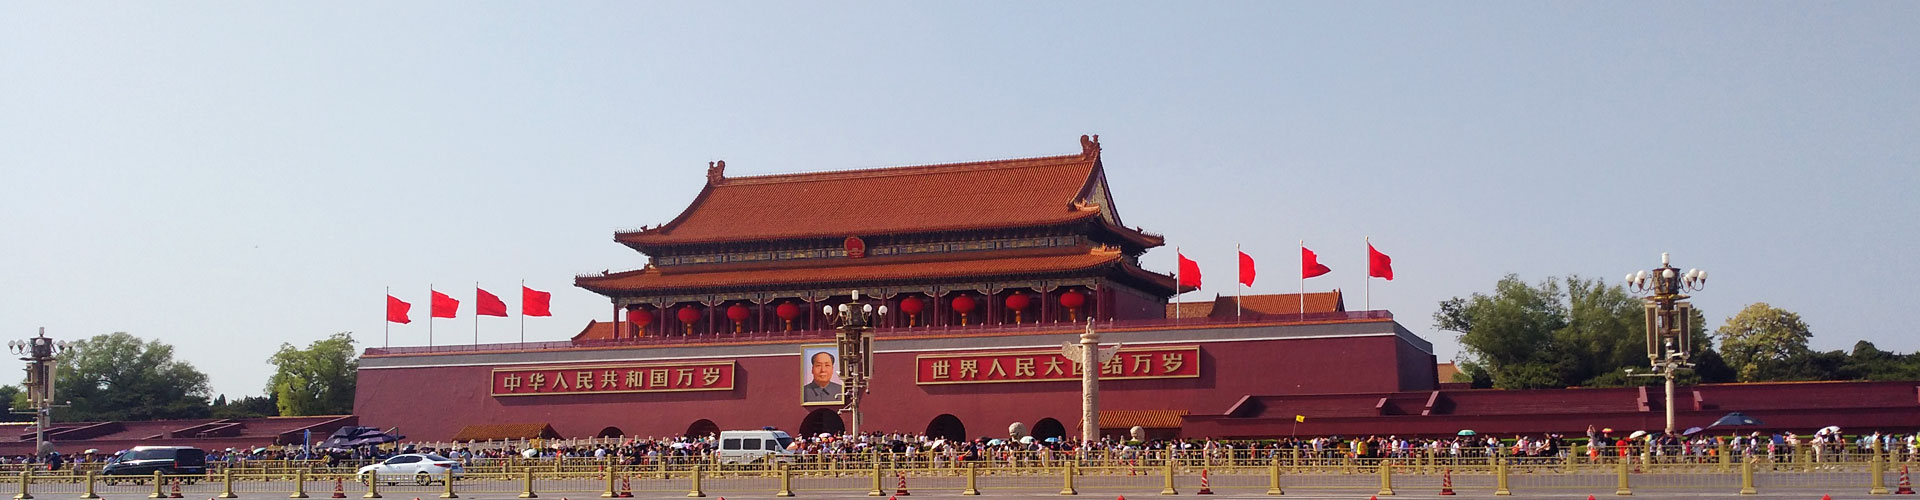 plaza Tiananmen